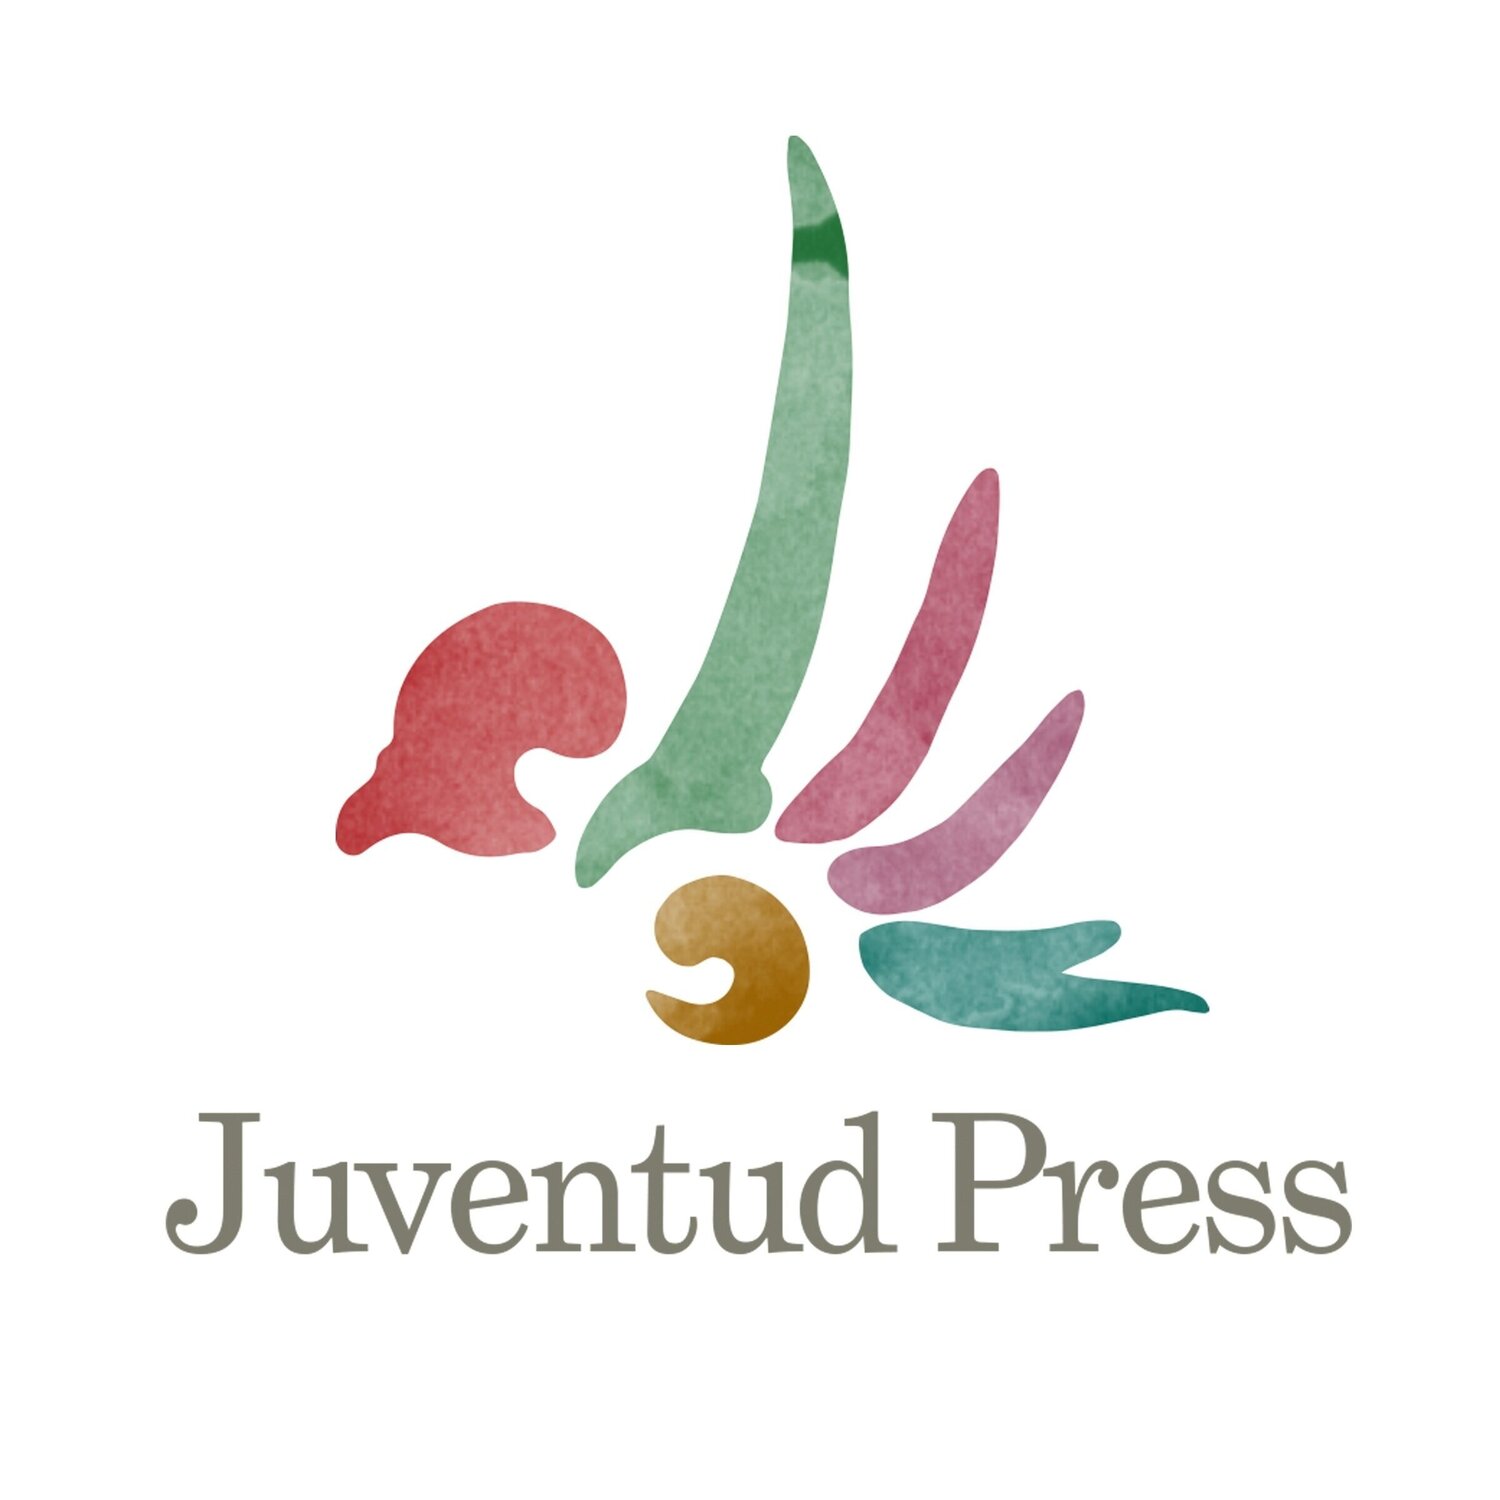 Juventud Press